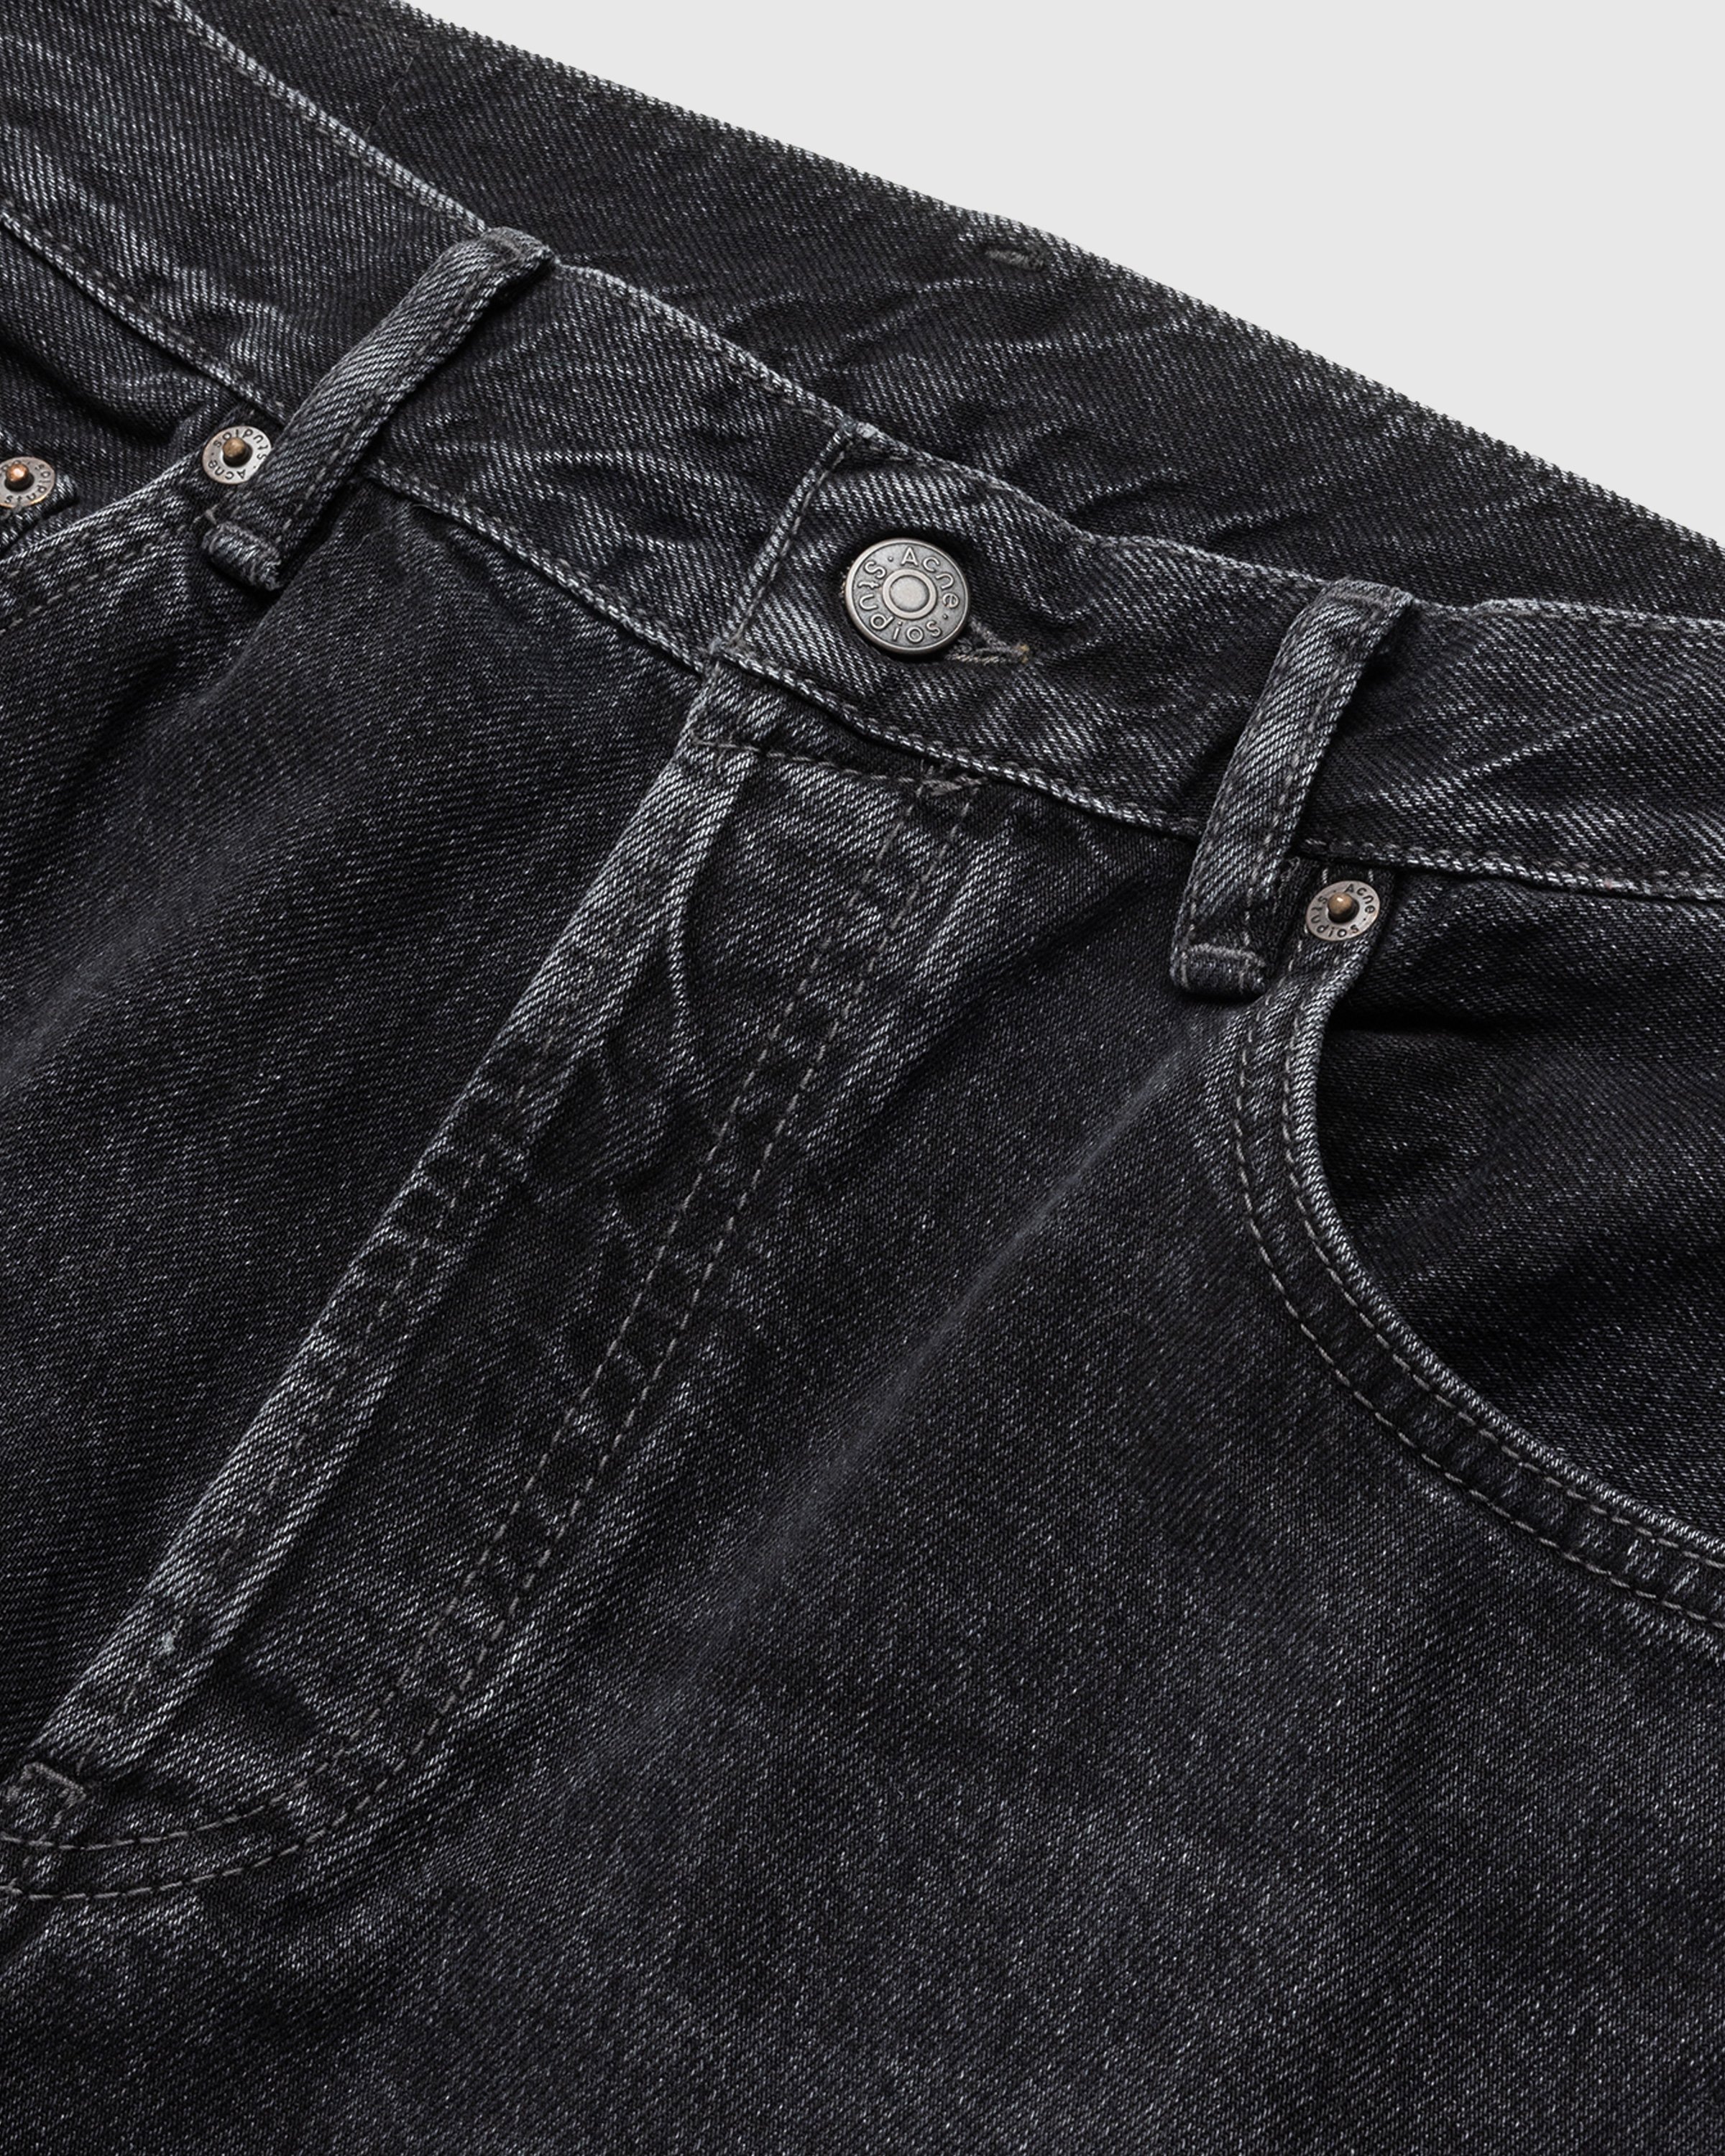 Acne Studios - Loose Fit Jeans 2021 Vintage Black - Clothing - Black - Image 7